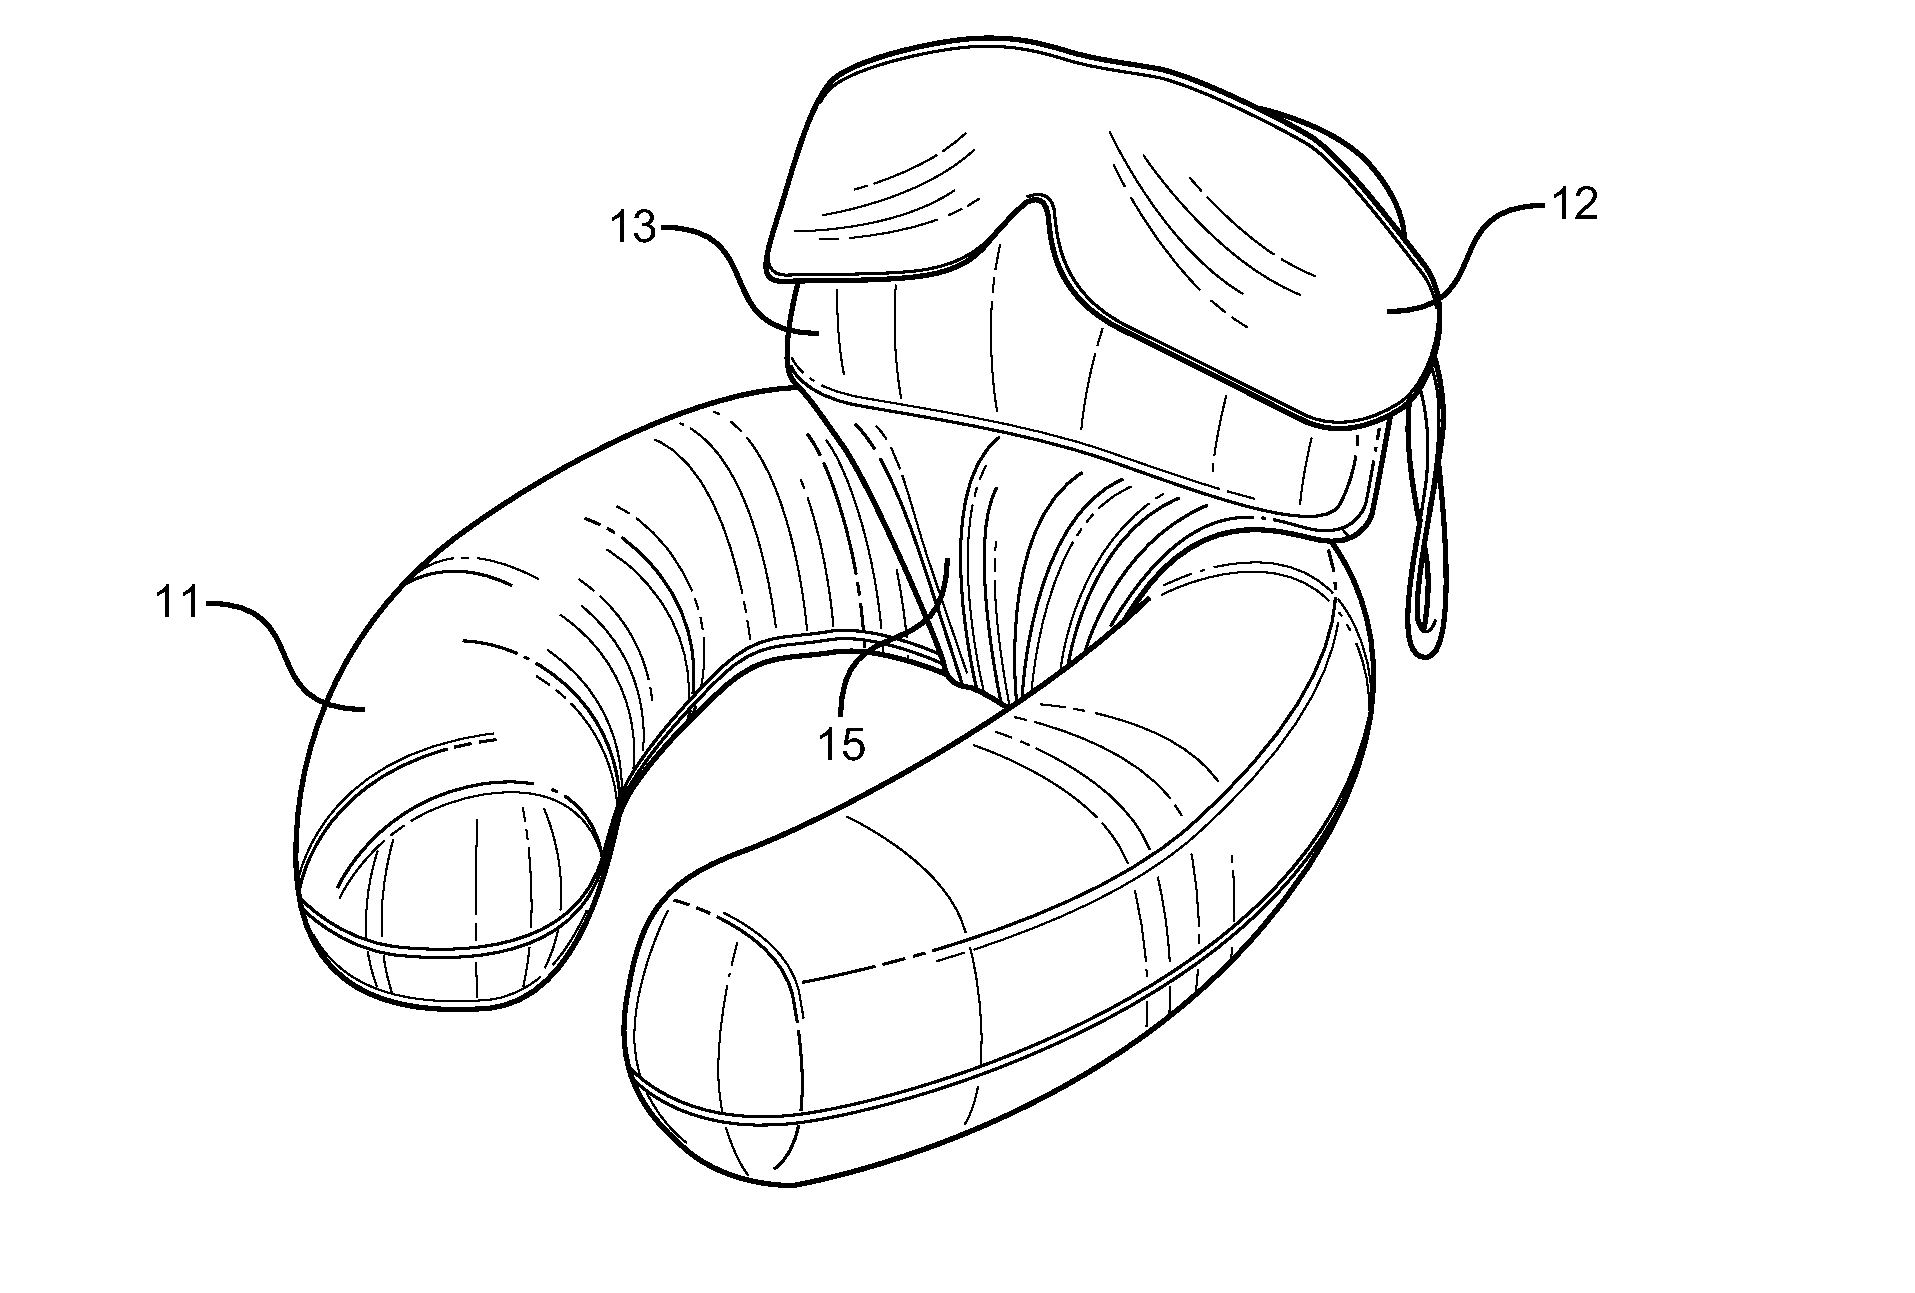 Headrest Pillow and Eye Mask Attachment for Neck Pillow